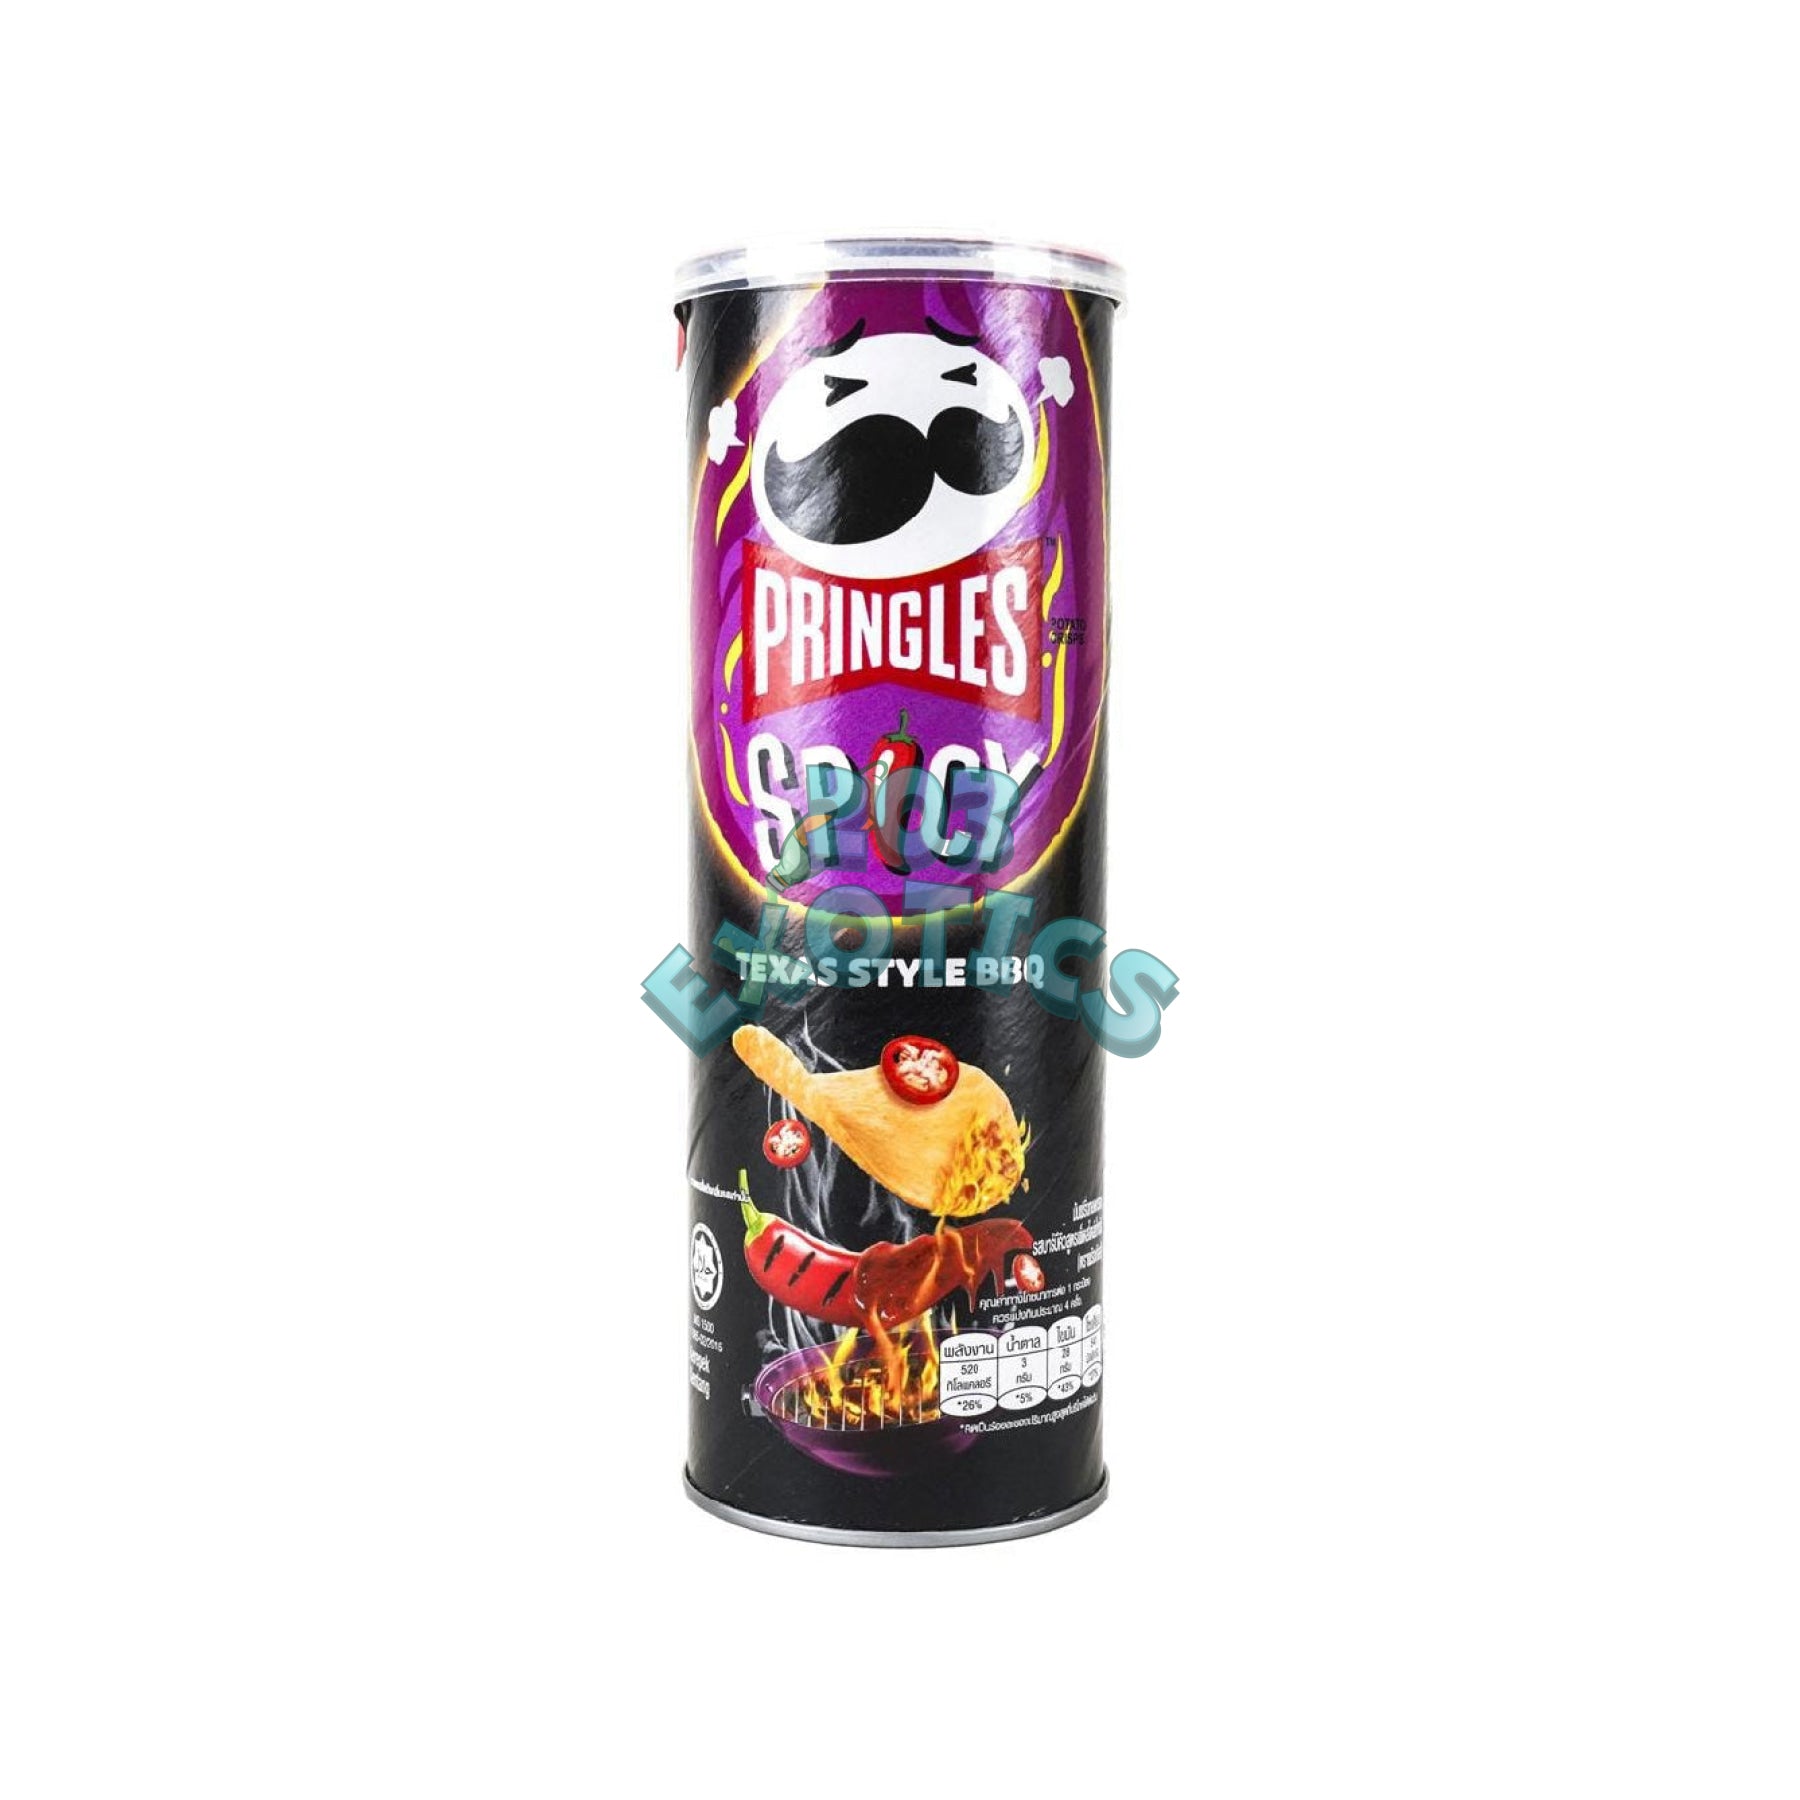 Pringles Spicy Texas Style Bbq (3.59Oz)